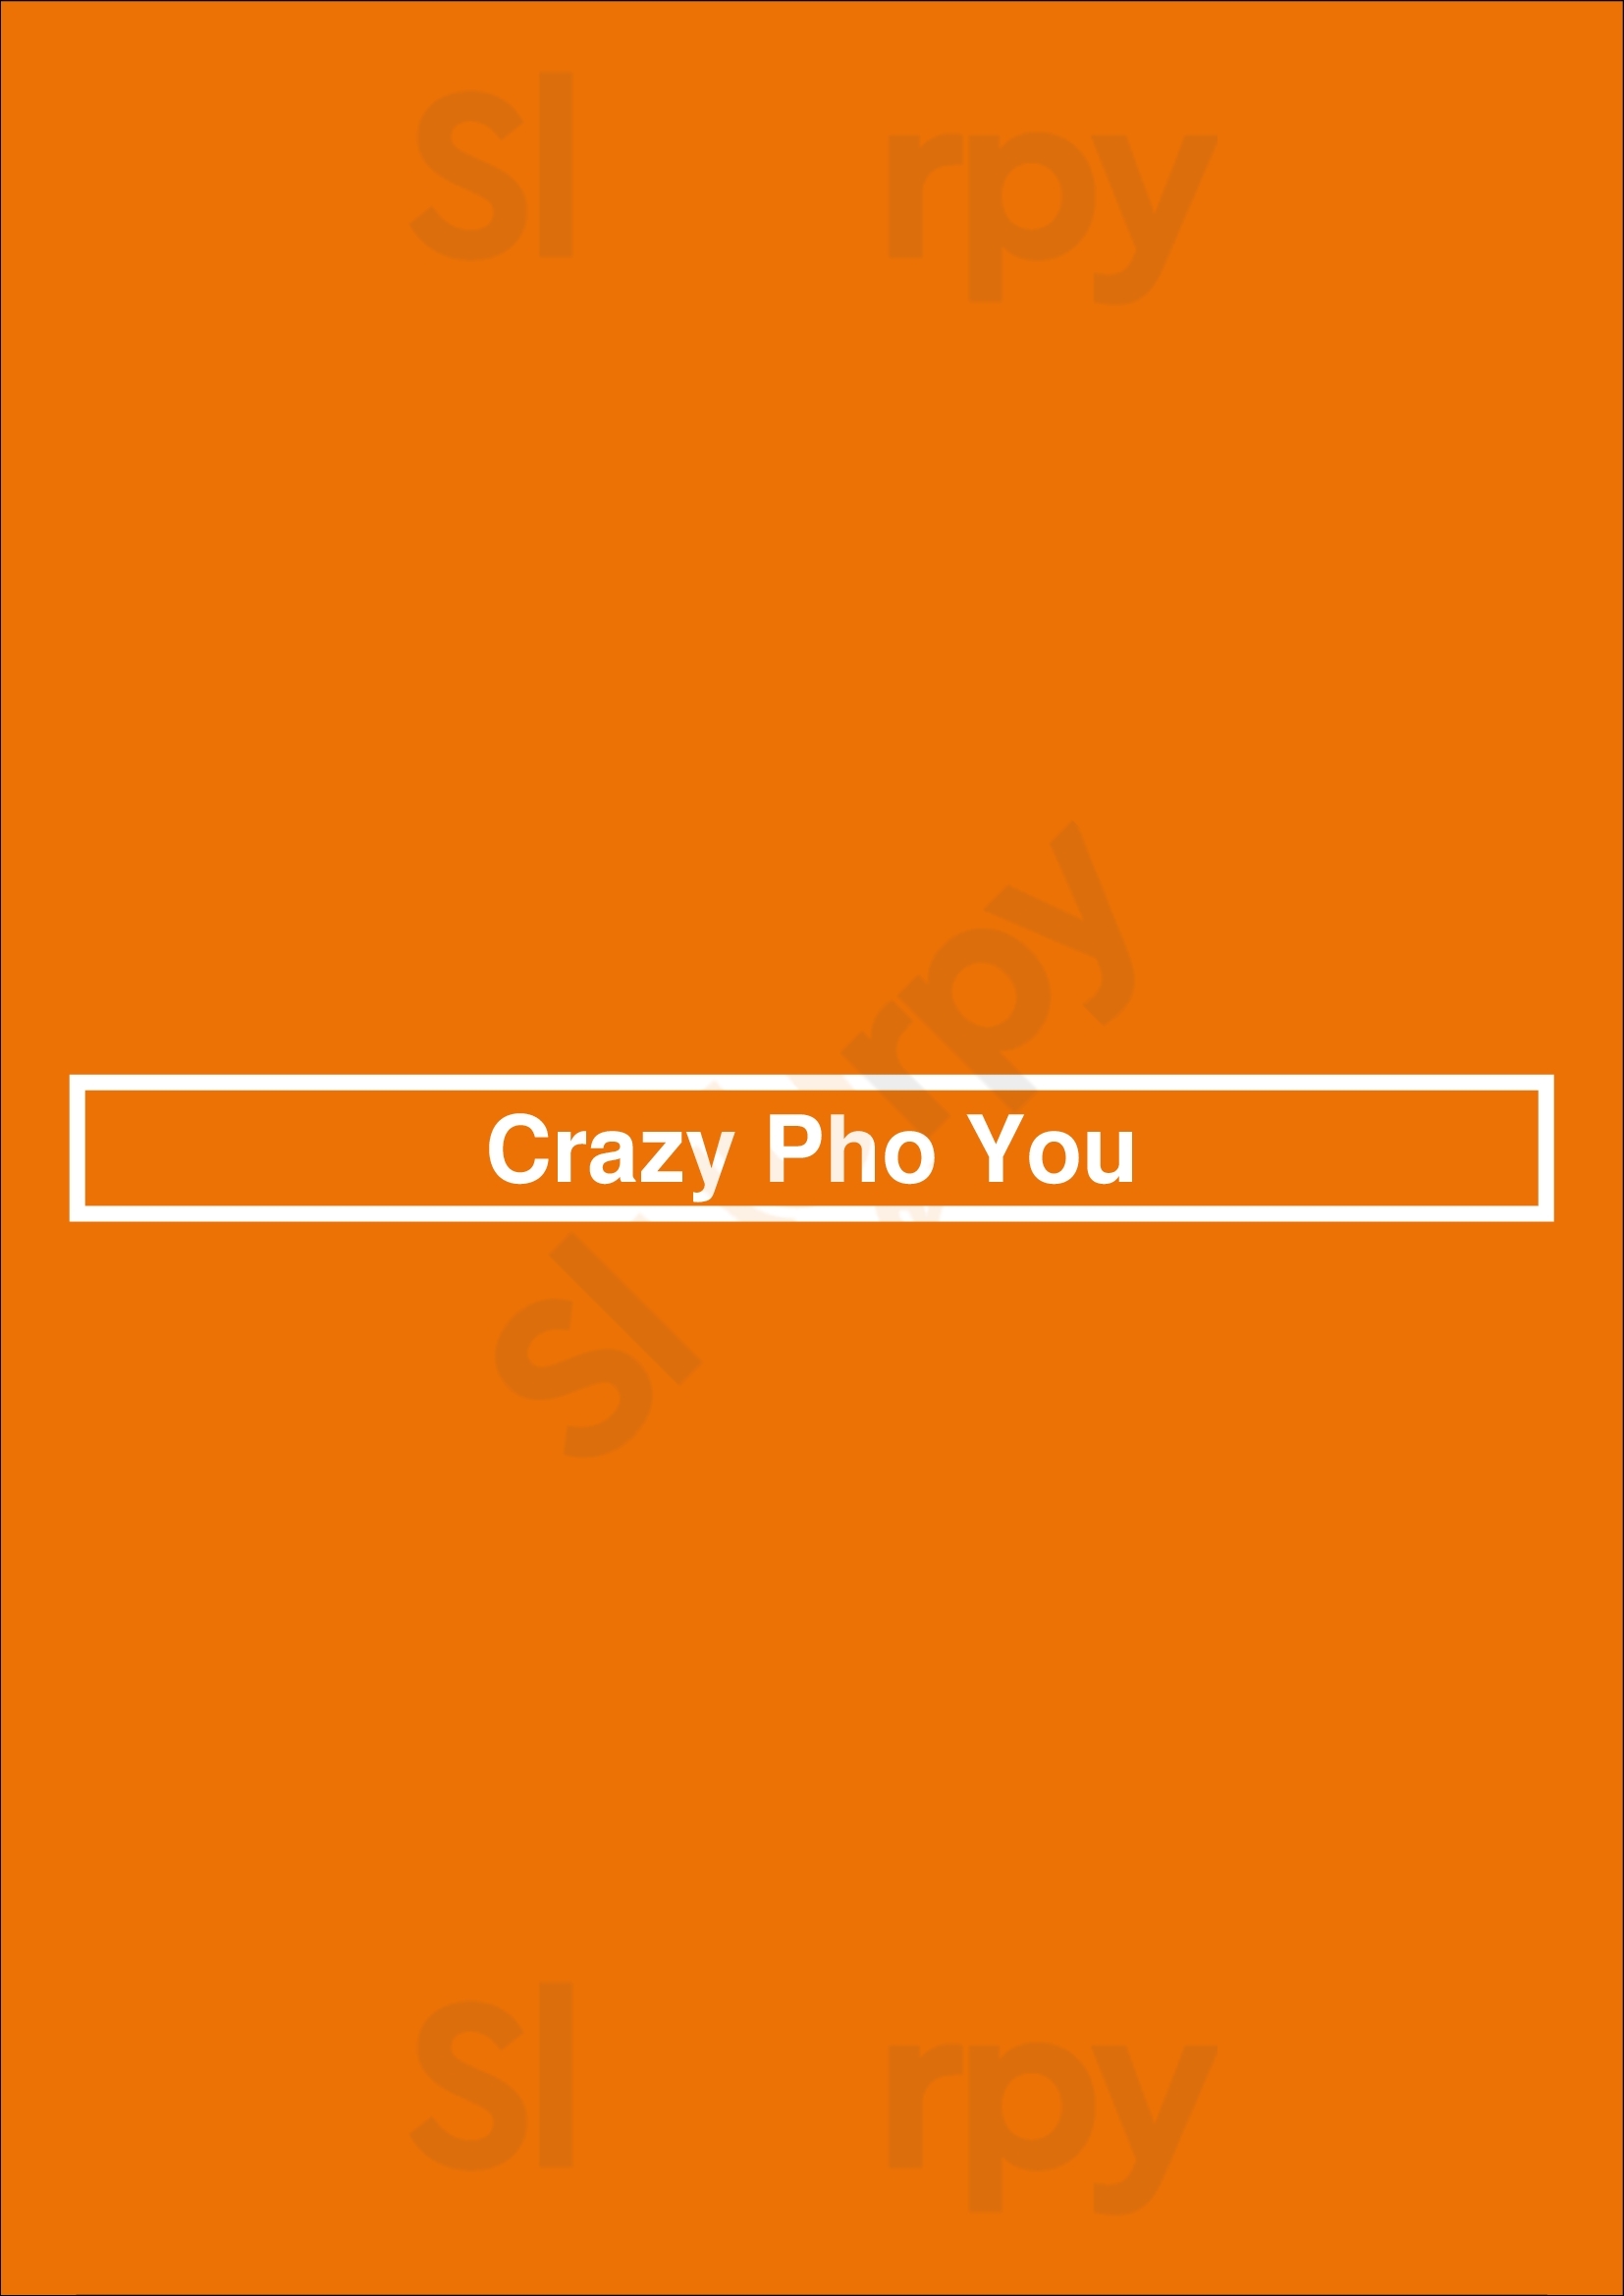 Crazy Pho You Ottawa Menu - 1